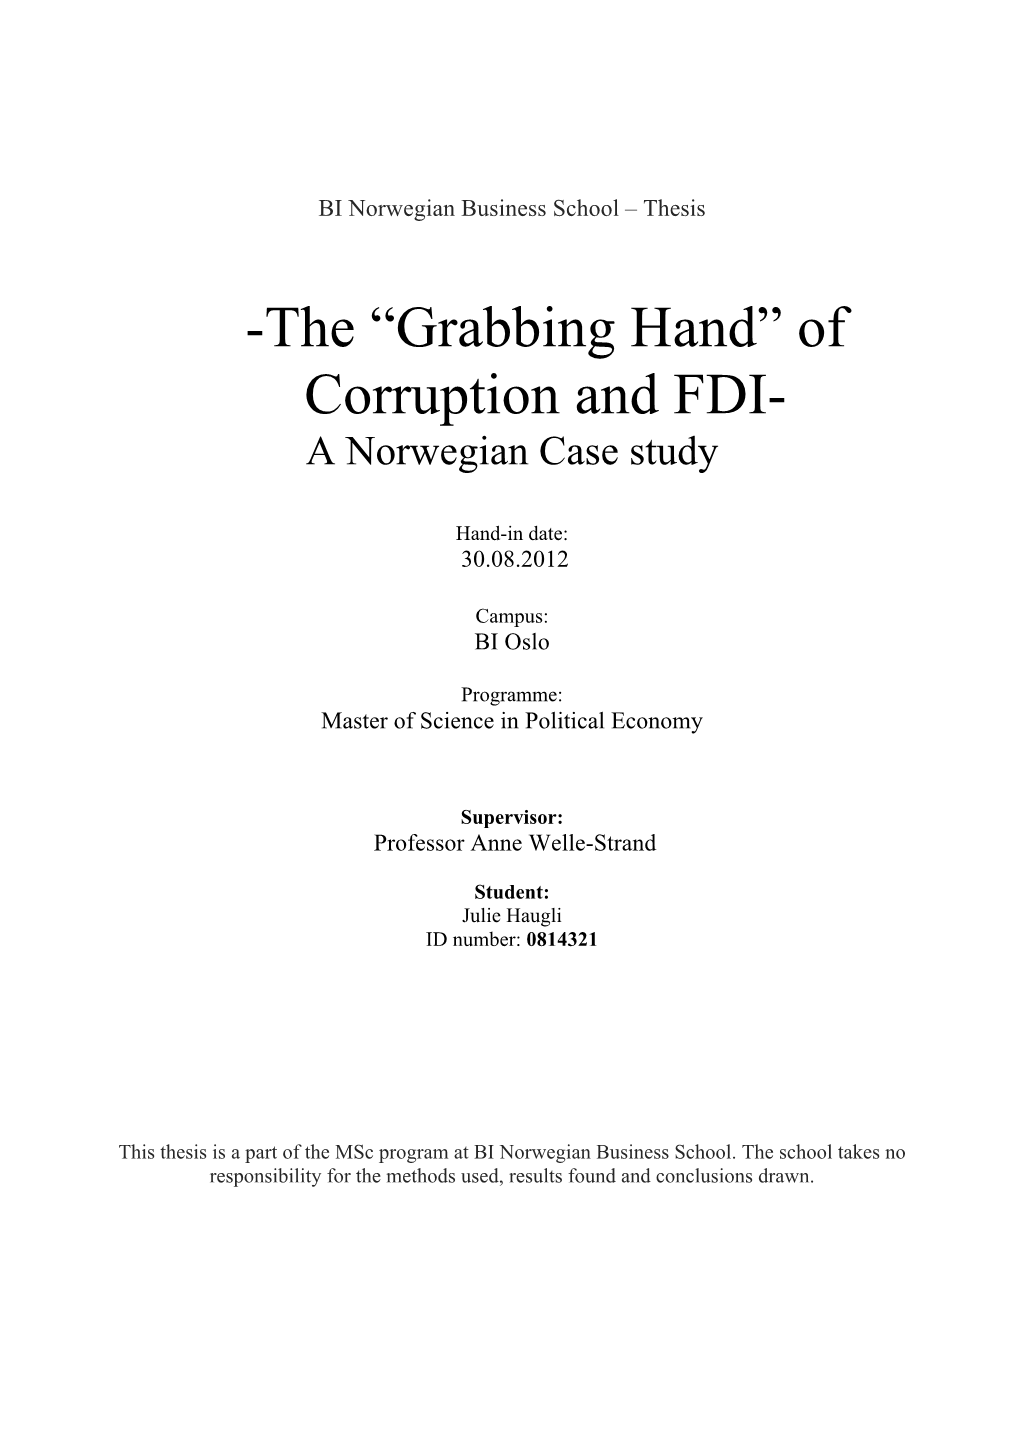 The “Grabbing Hand” of Corruption and FDI- a Norwegian Case Study